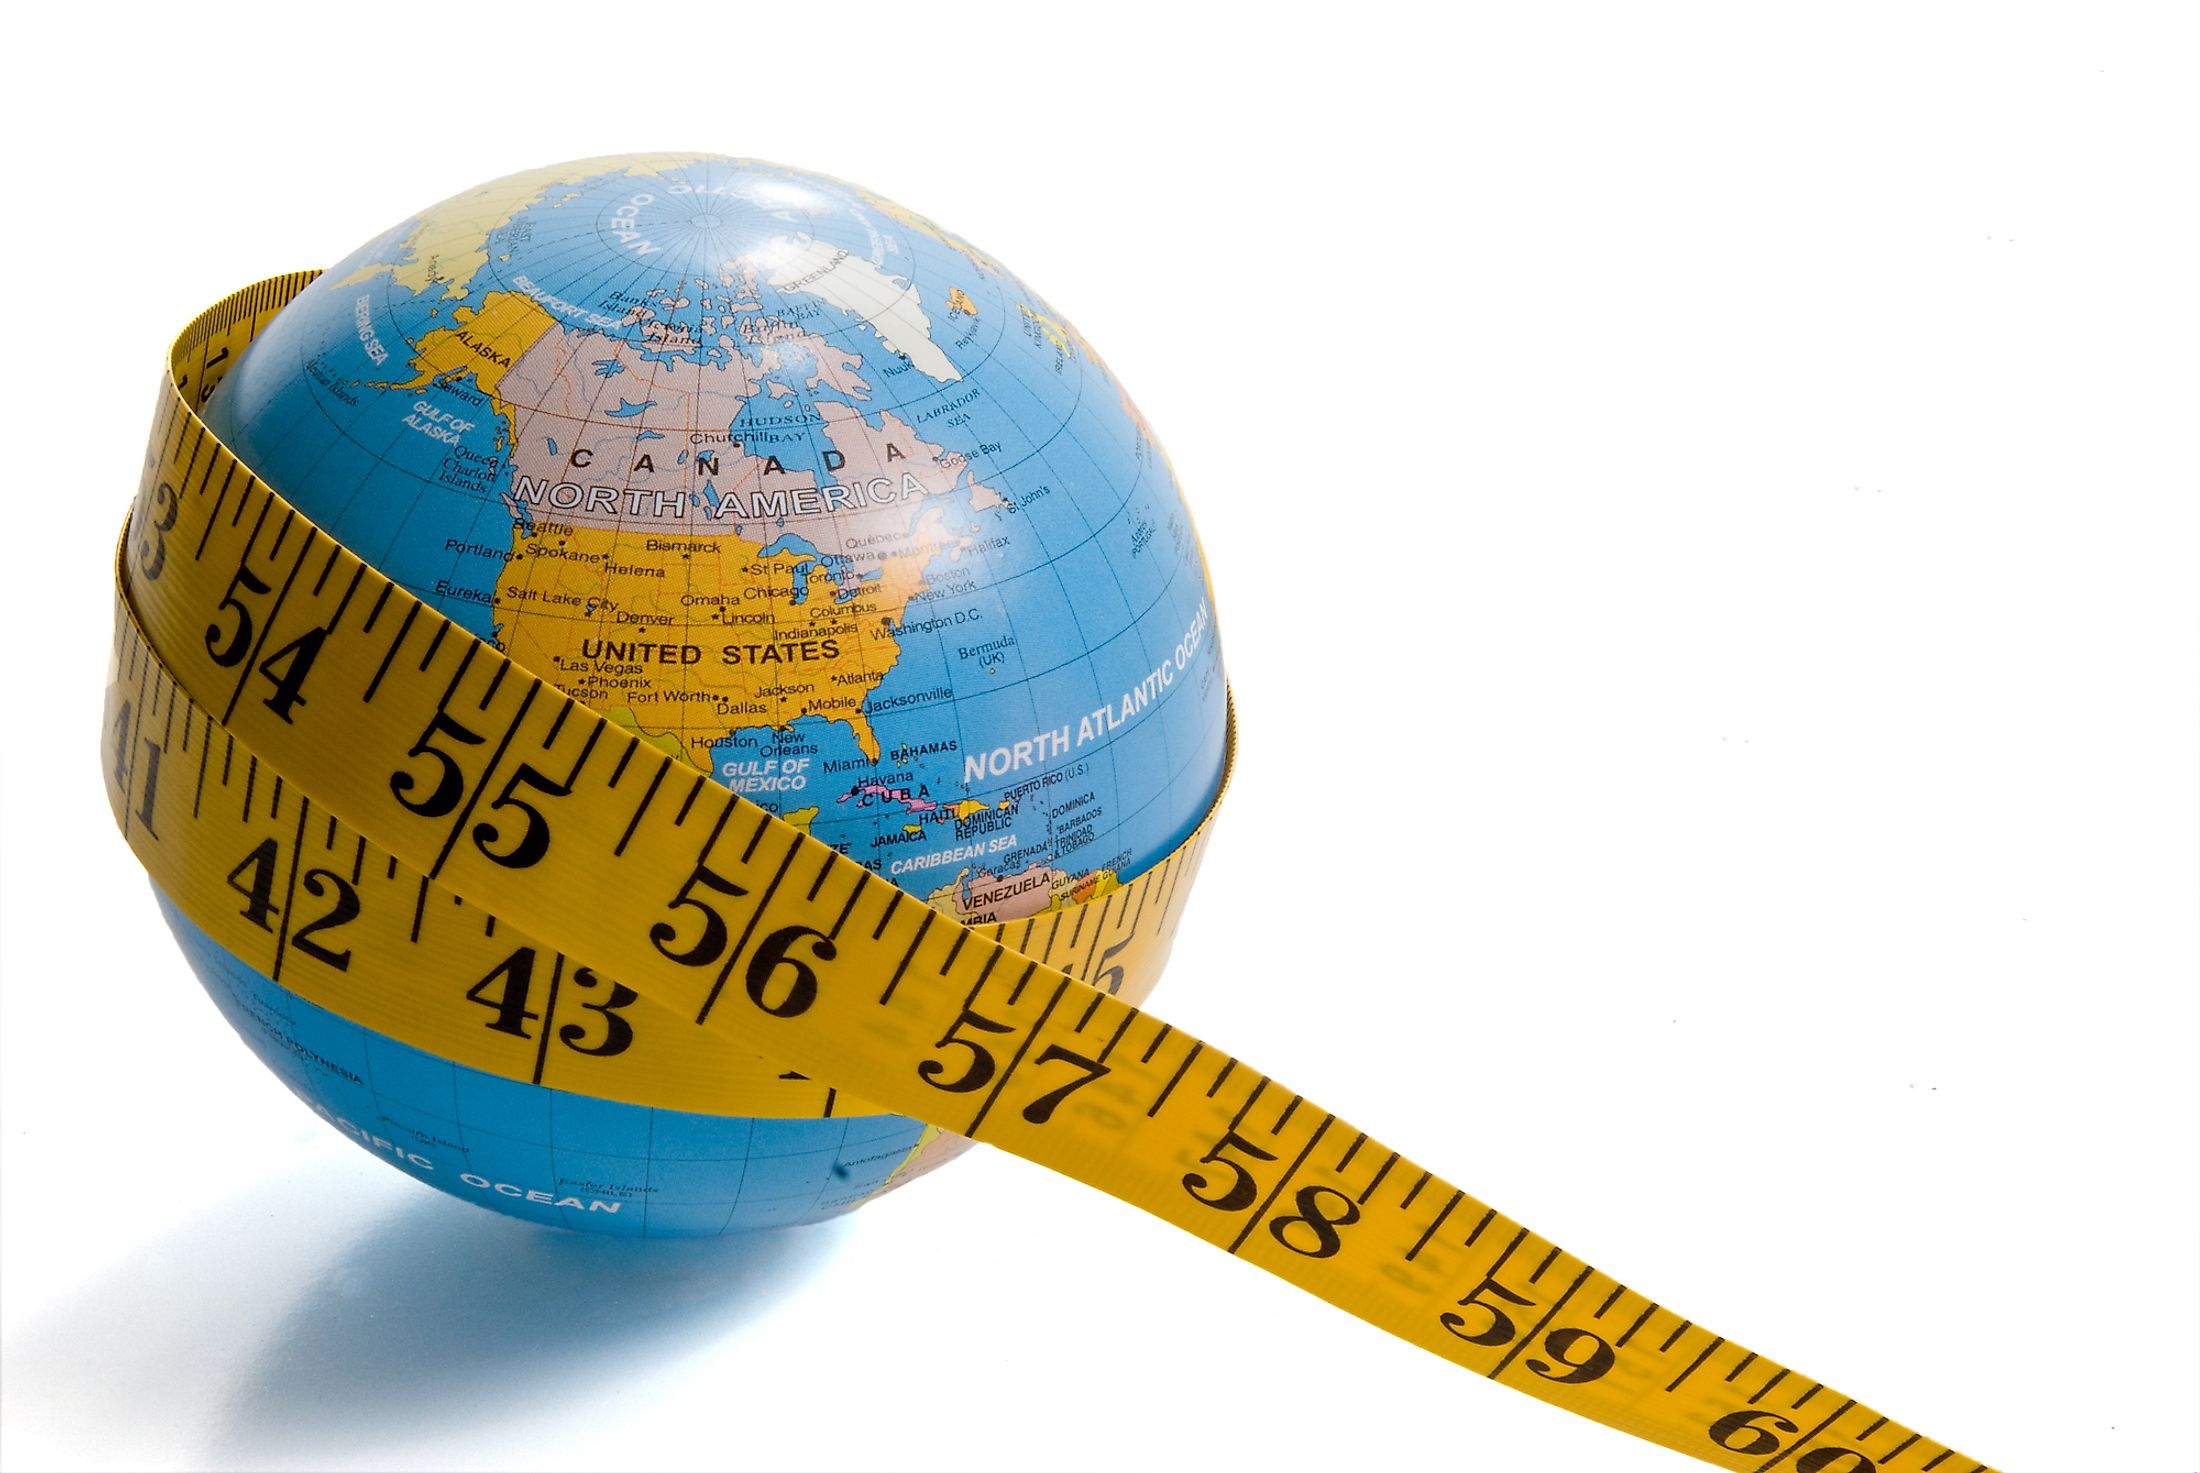 Worldwide obesity rates